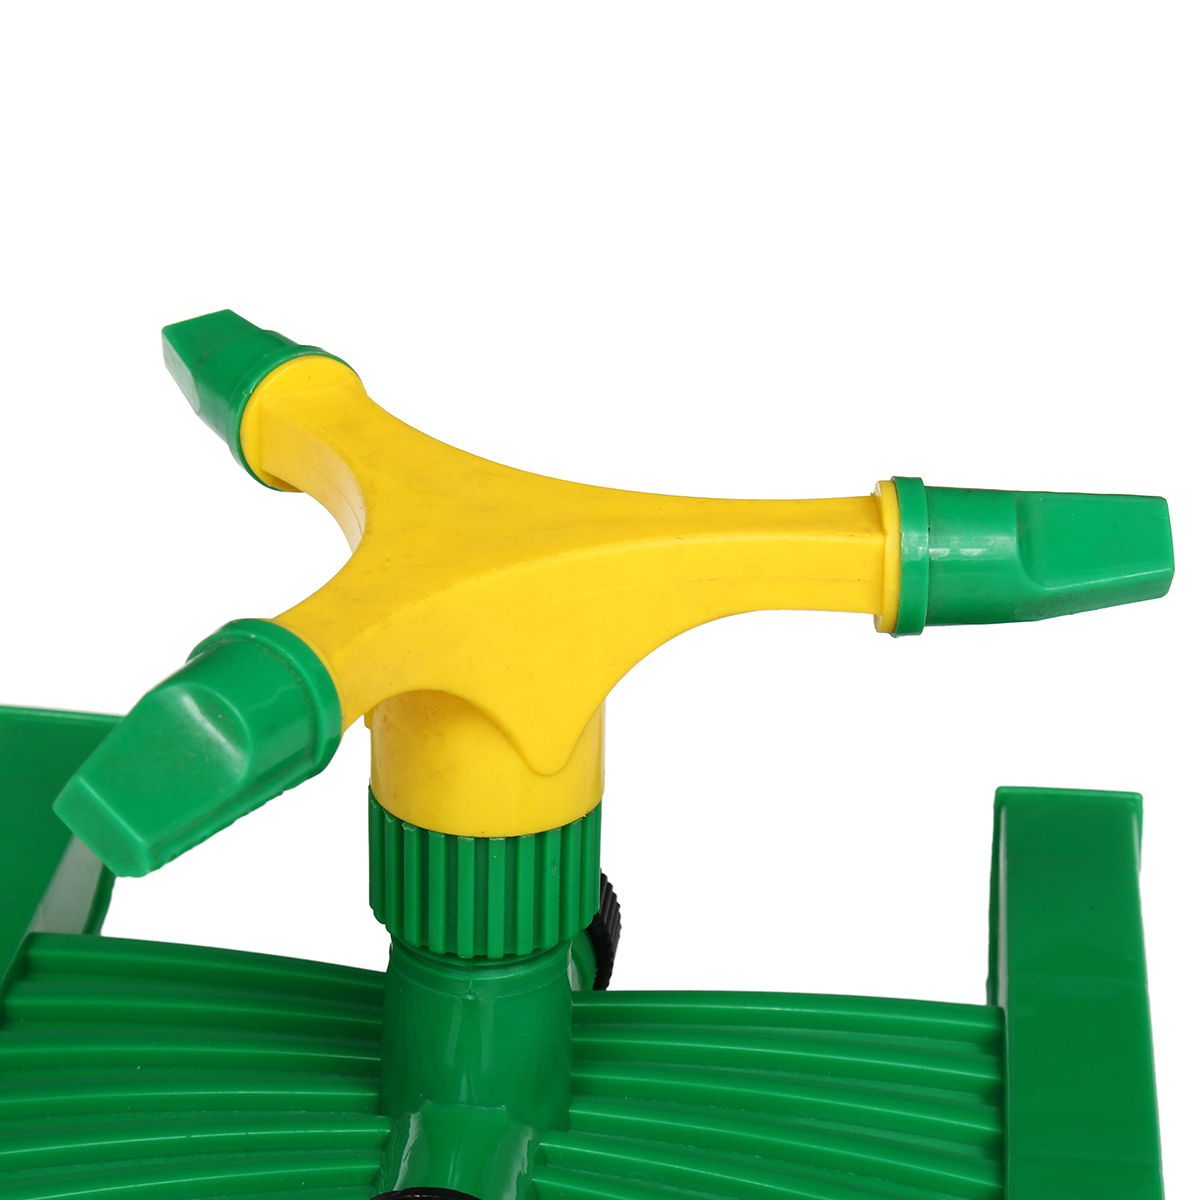 Rotating-Impulse-Sprinkler-Garden-Lawn-Grass-Watering-System-Water-Hose-Sprayer-1478934-7